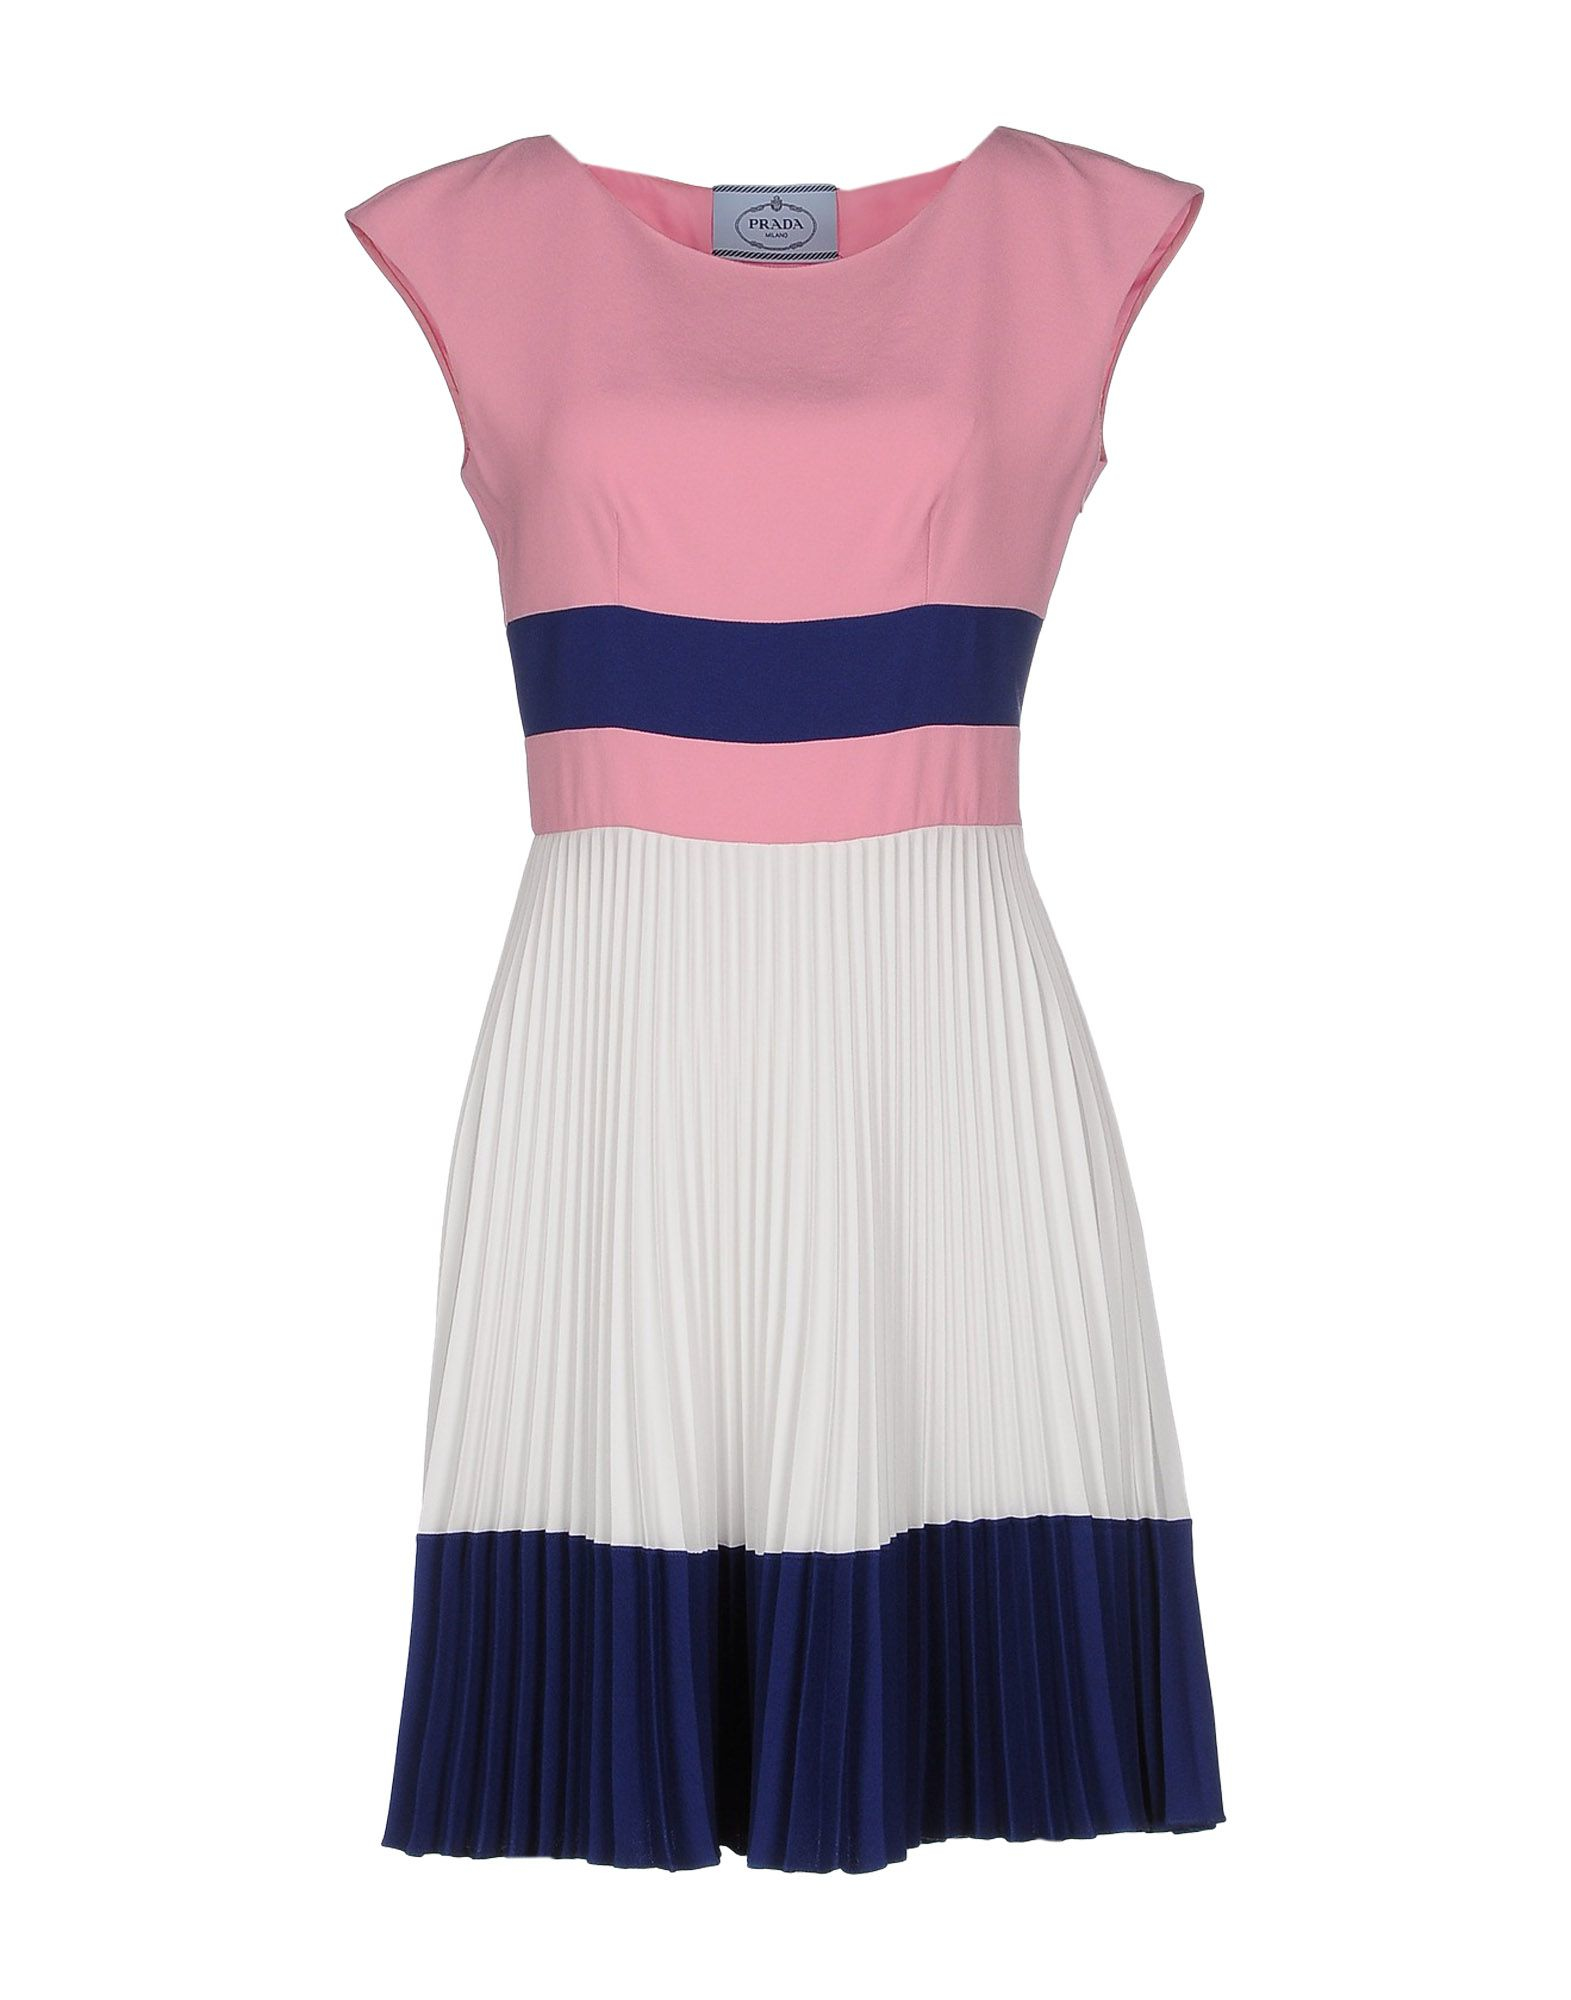 Lyst - Prada Short Dress in Pink